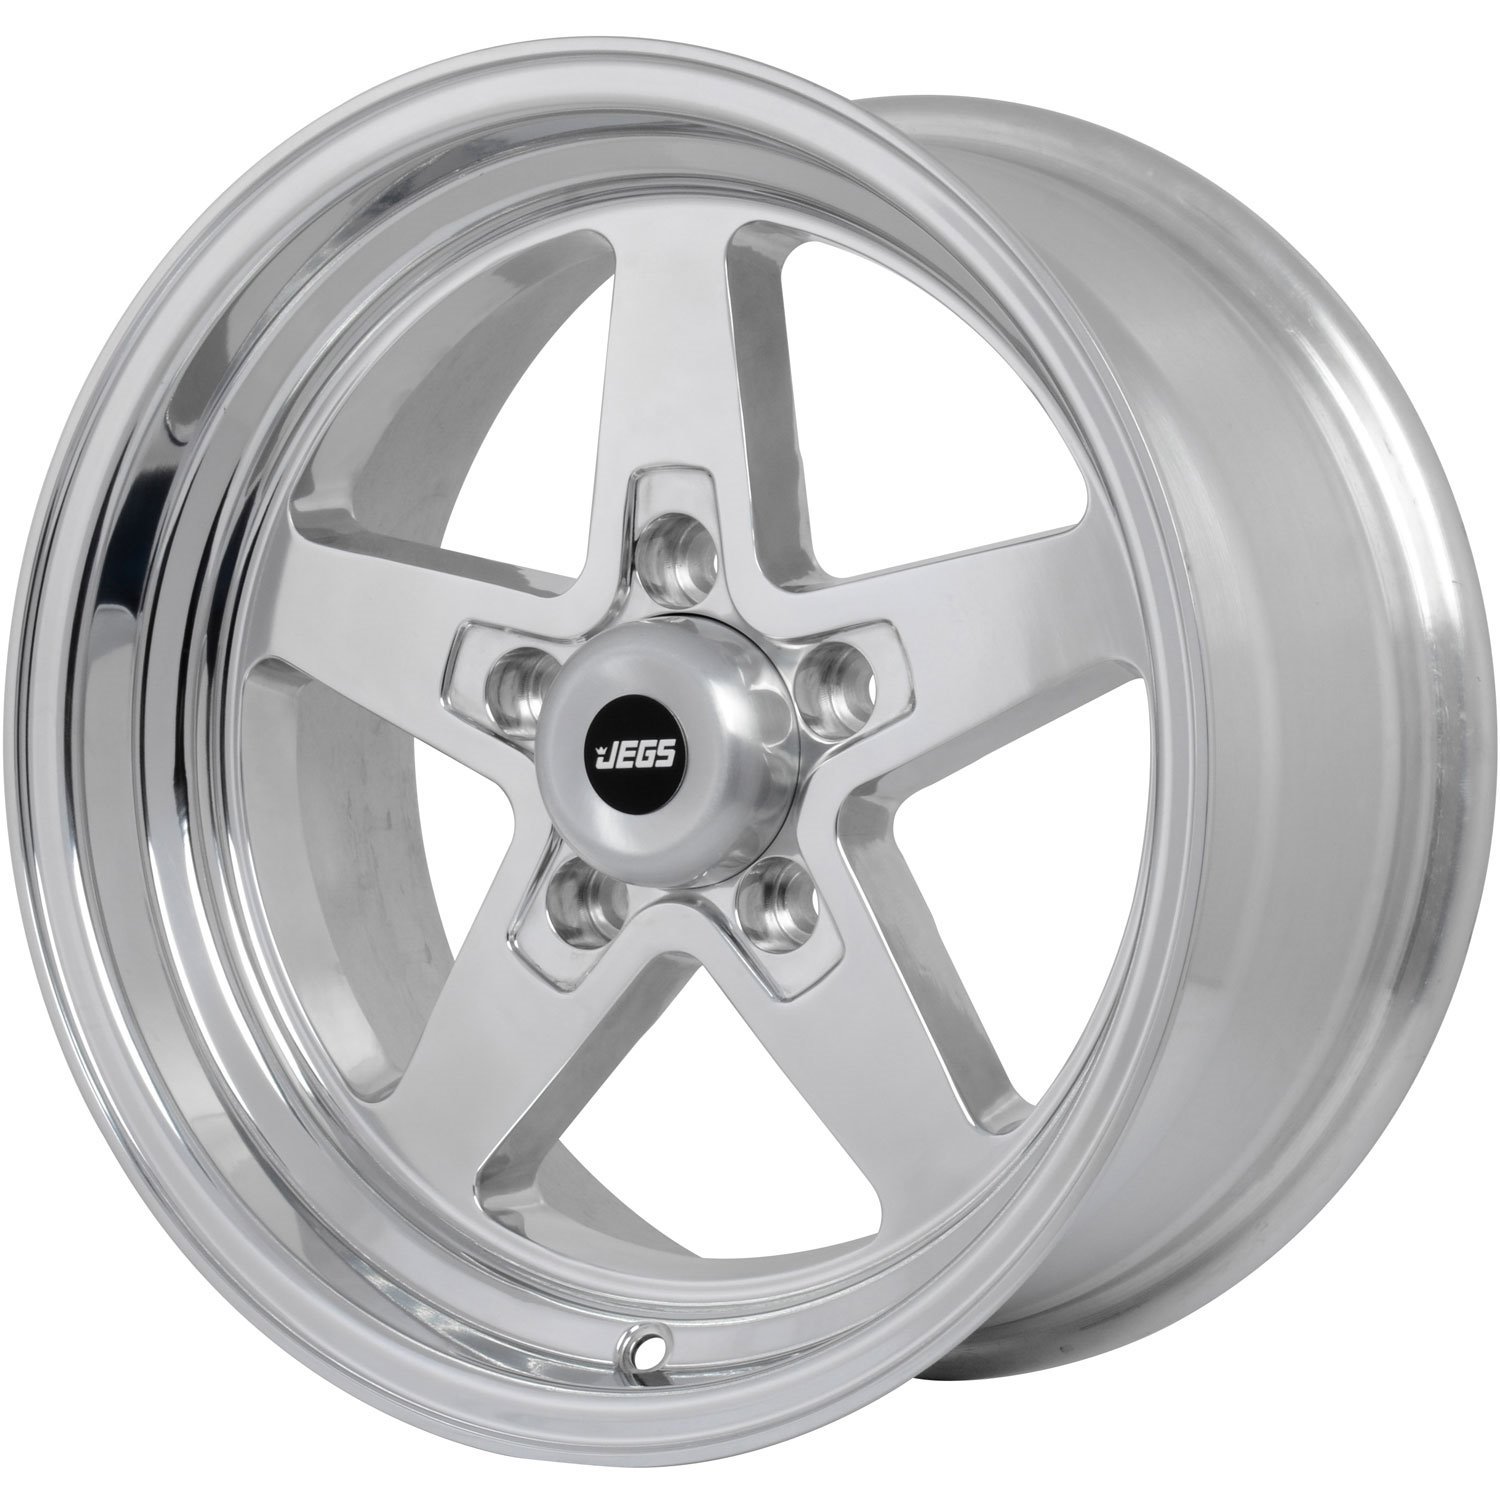 SSR Star Wheel [Size: 15" x 7"] Polished